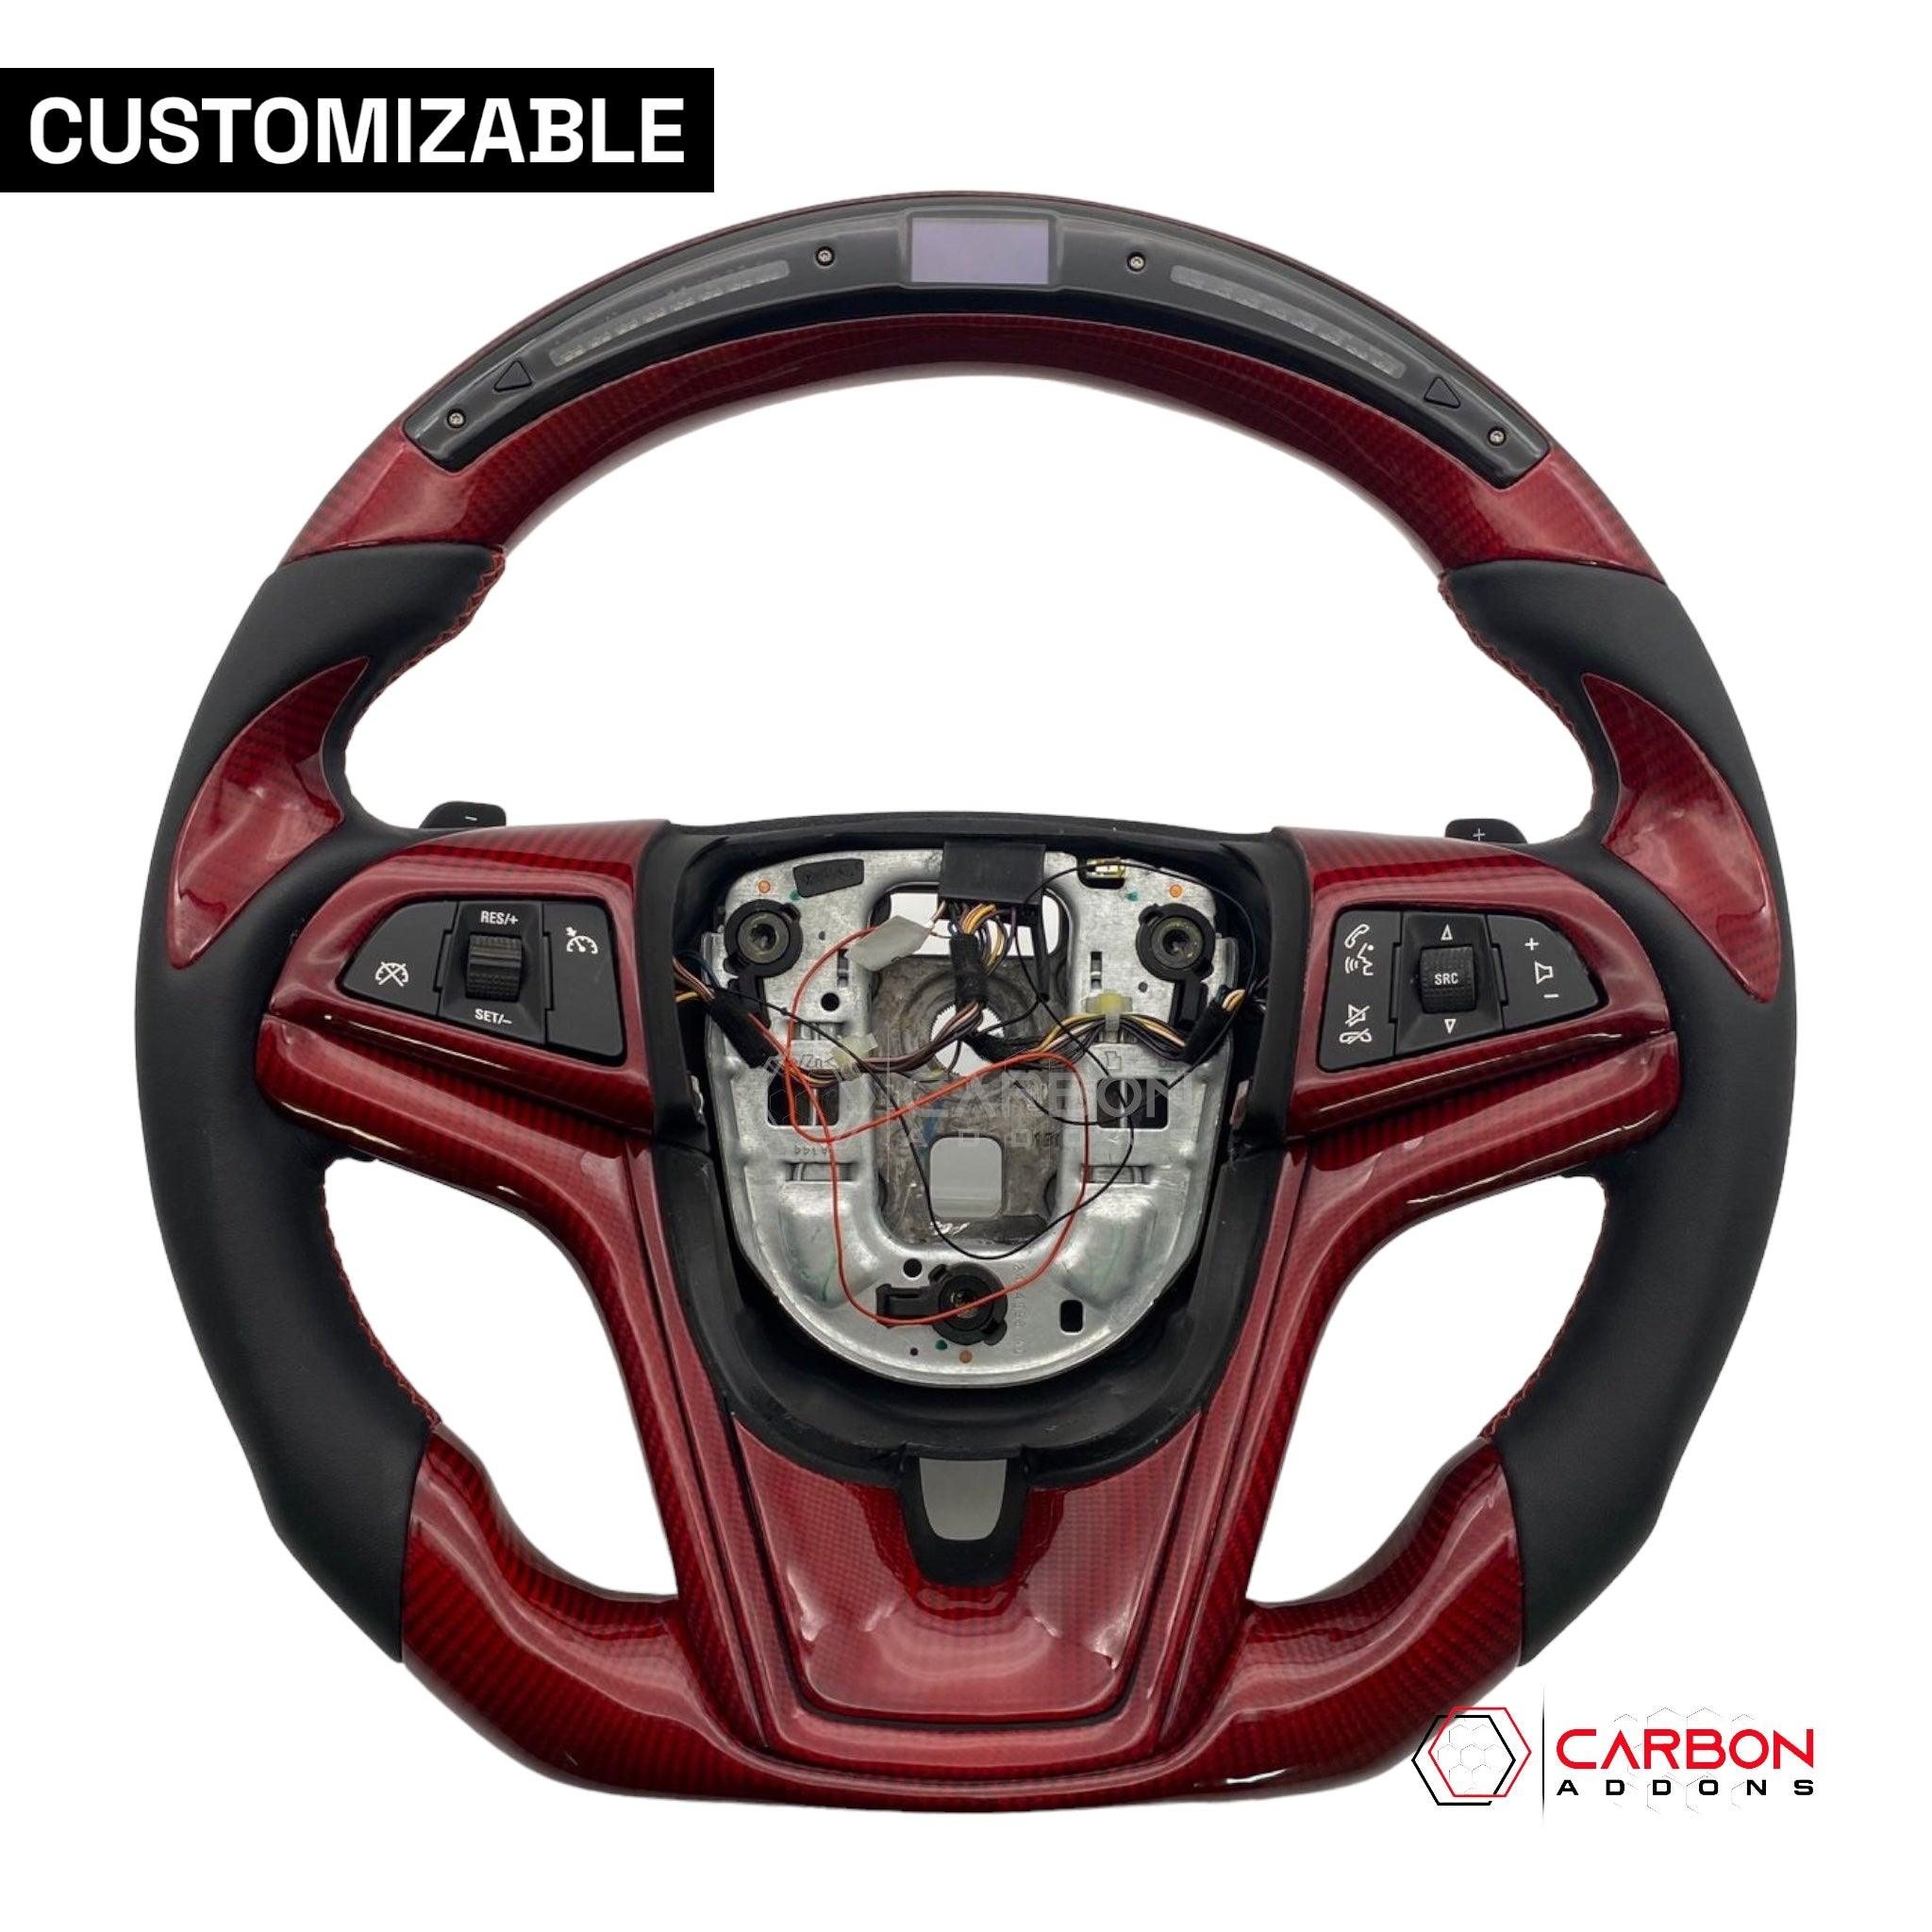 [Complete] Custom Carbon Fiber Steering Wheel For 2012-2015 Chevy Camaro - carbonaddons Carbon Fiber Parts, Accessories, Upgrades, Mods